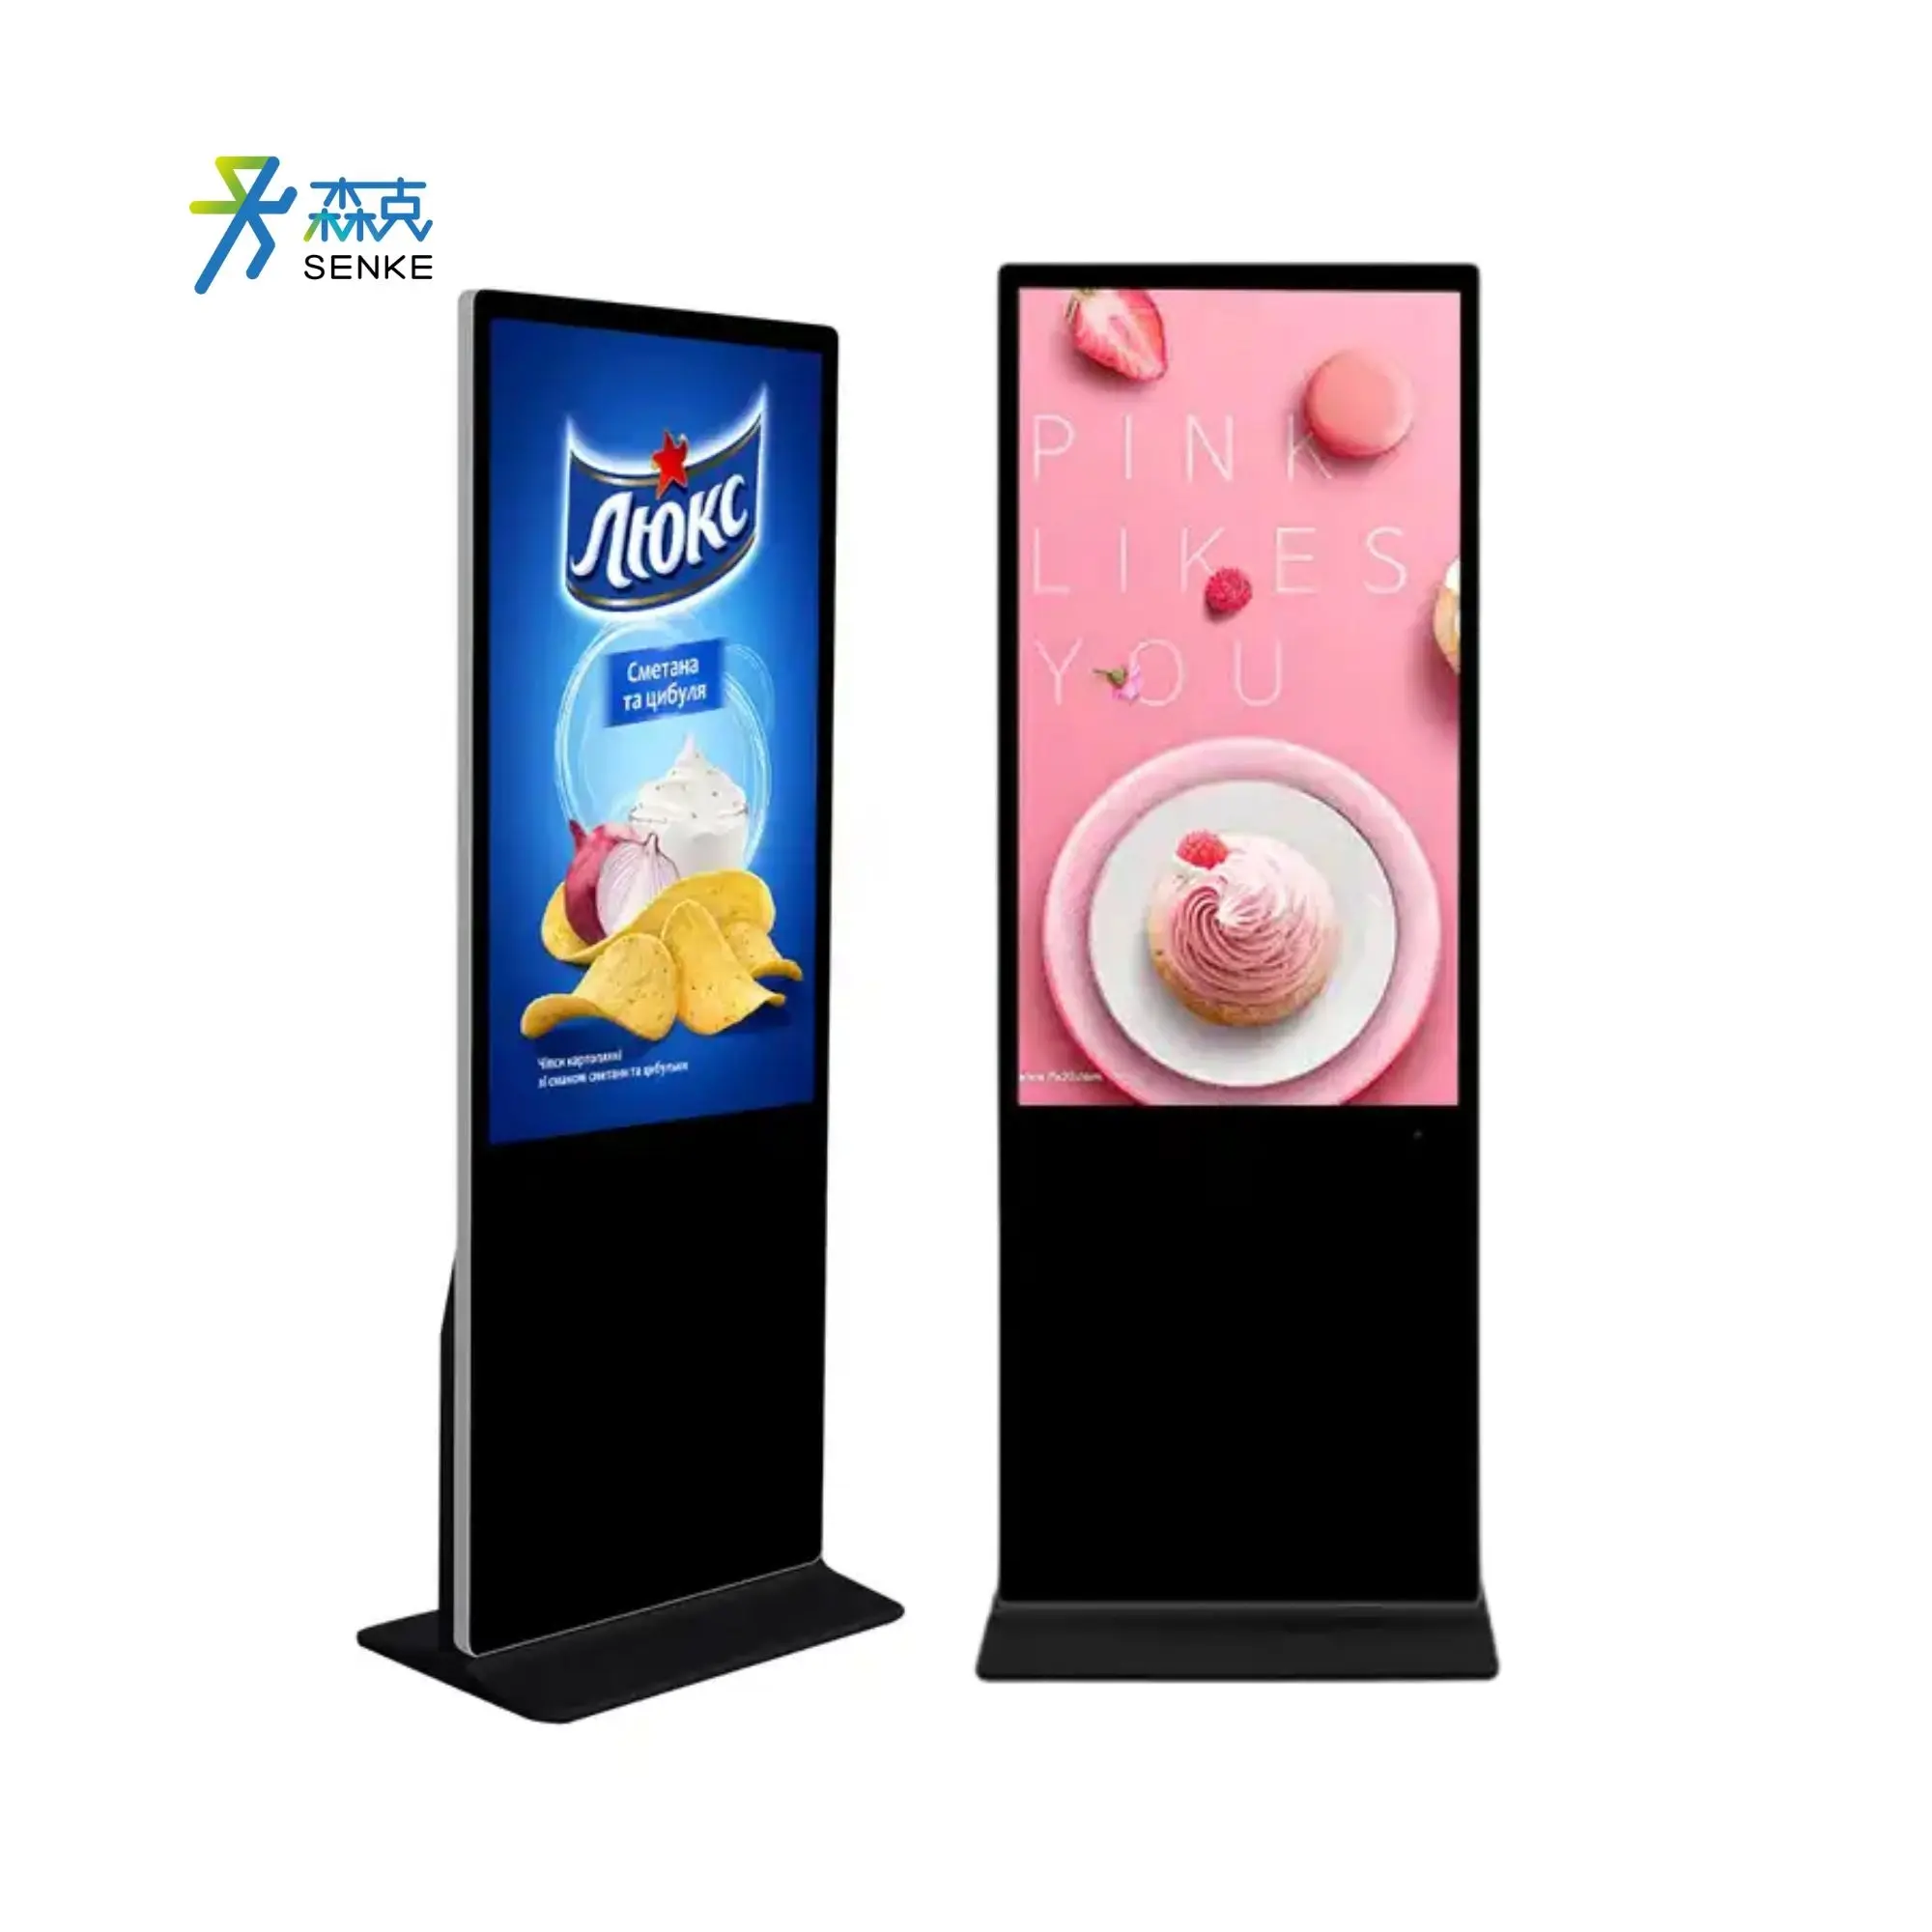 55 pollici rete commerciale pubblicità Digital Signage LCD LED Touch Screen chiosco